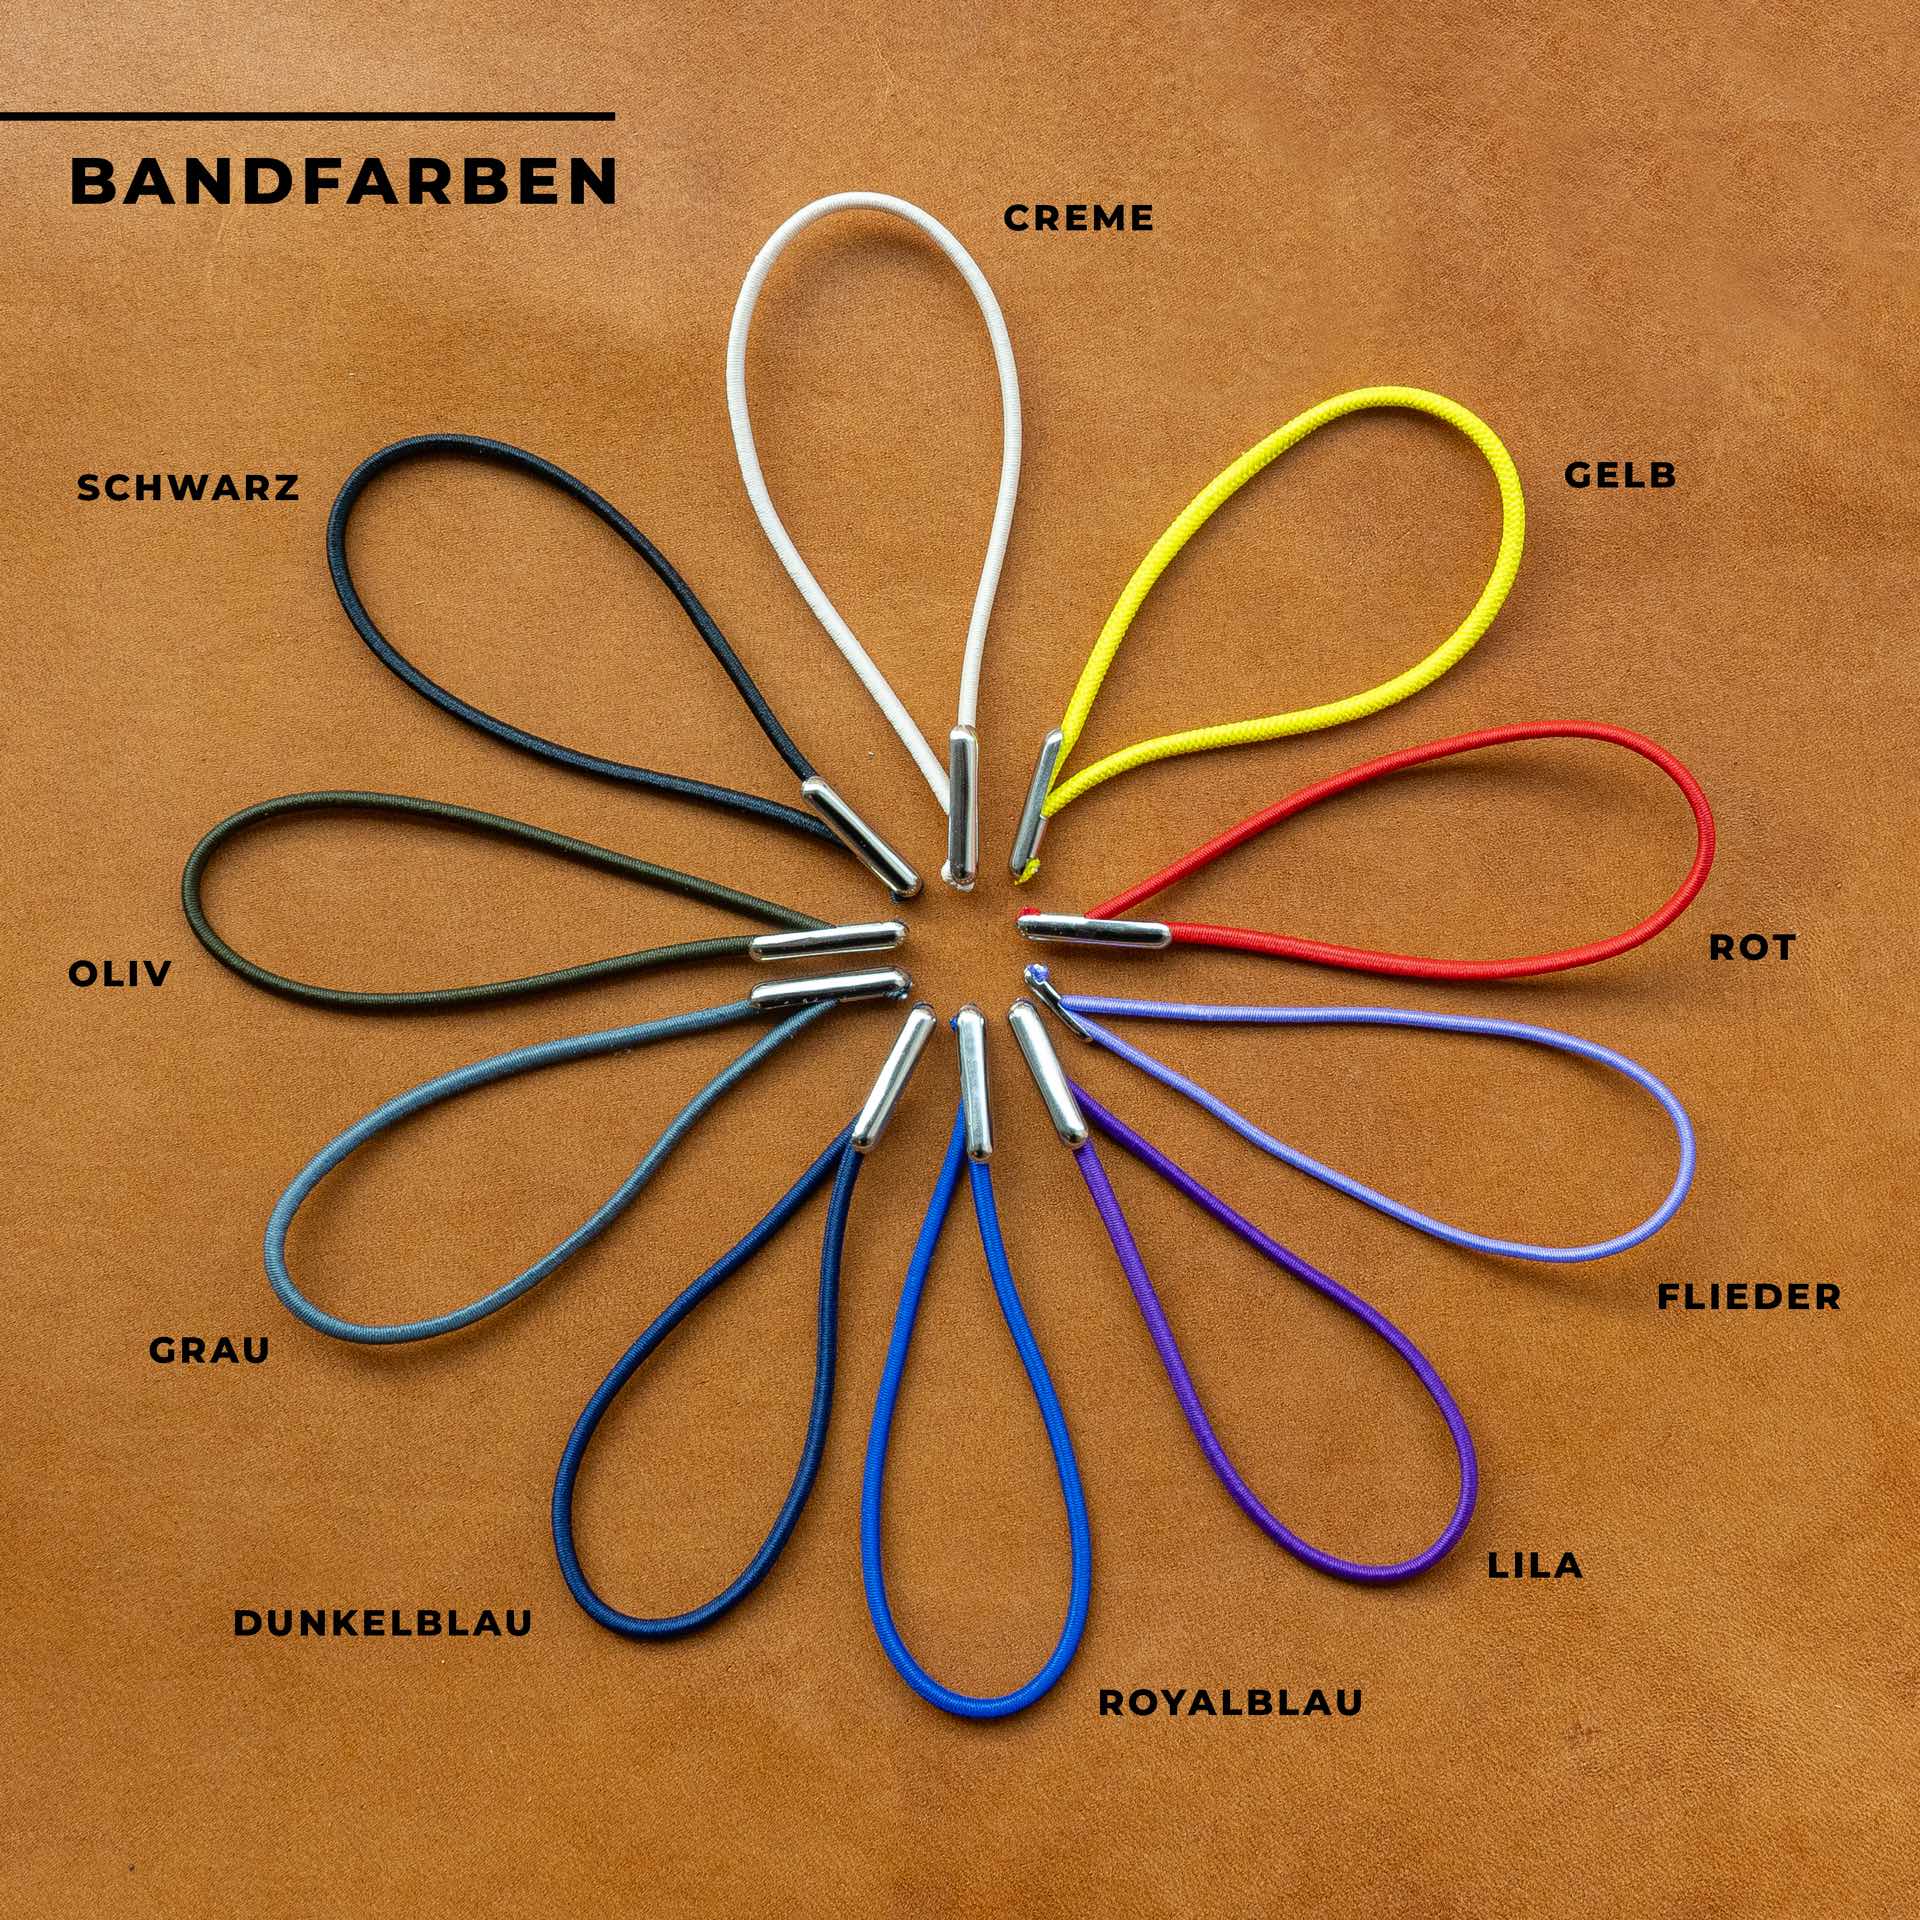 Bandfarben-Franziska-Klee-cognac-geoelt-bandfarben